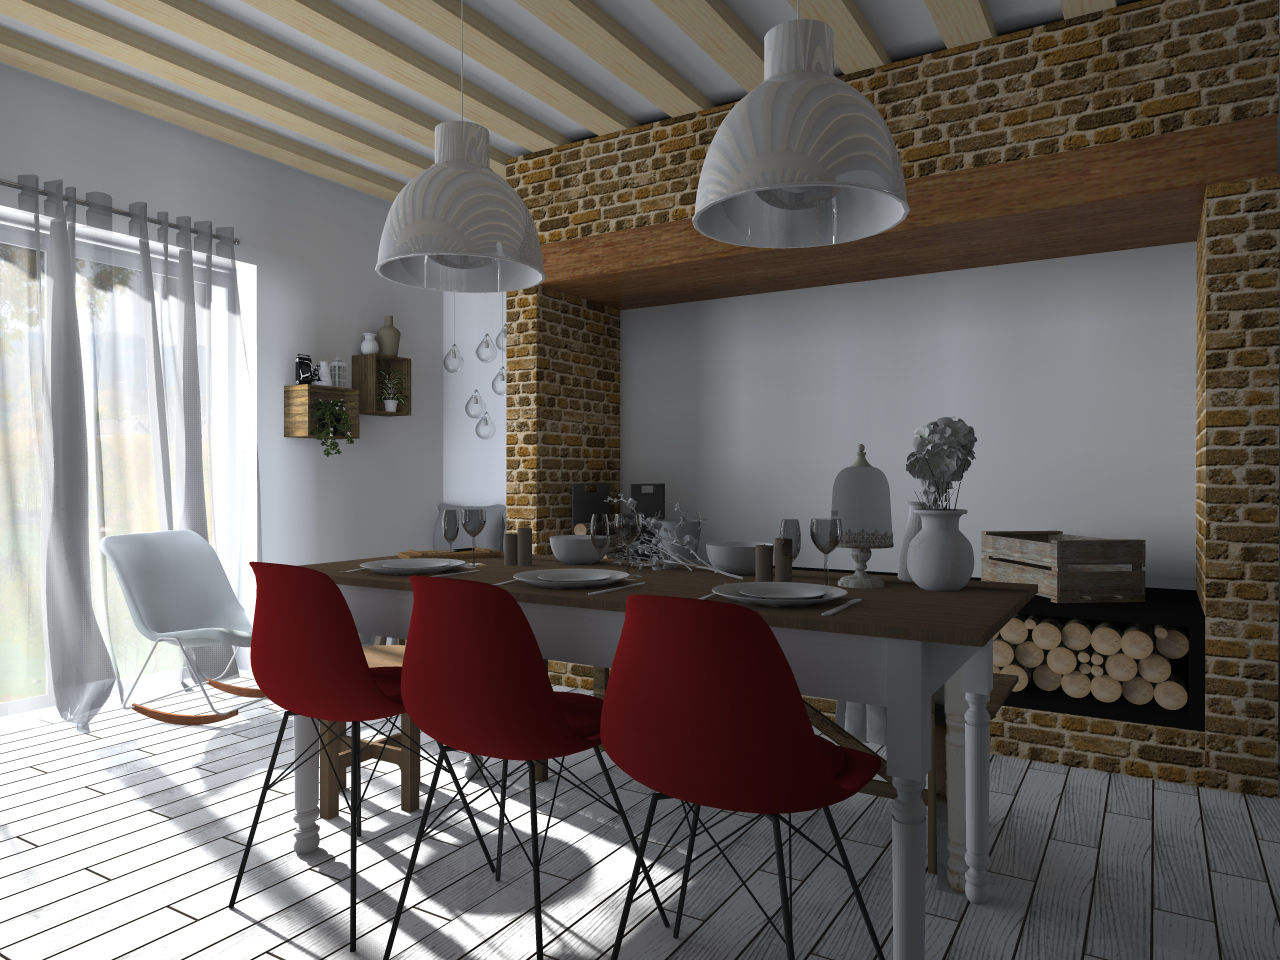 Ferme tarnaise , Sandia Design Sandia Design Rustic style kitchen